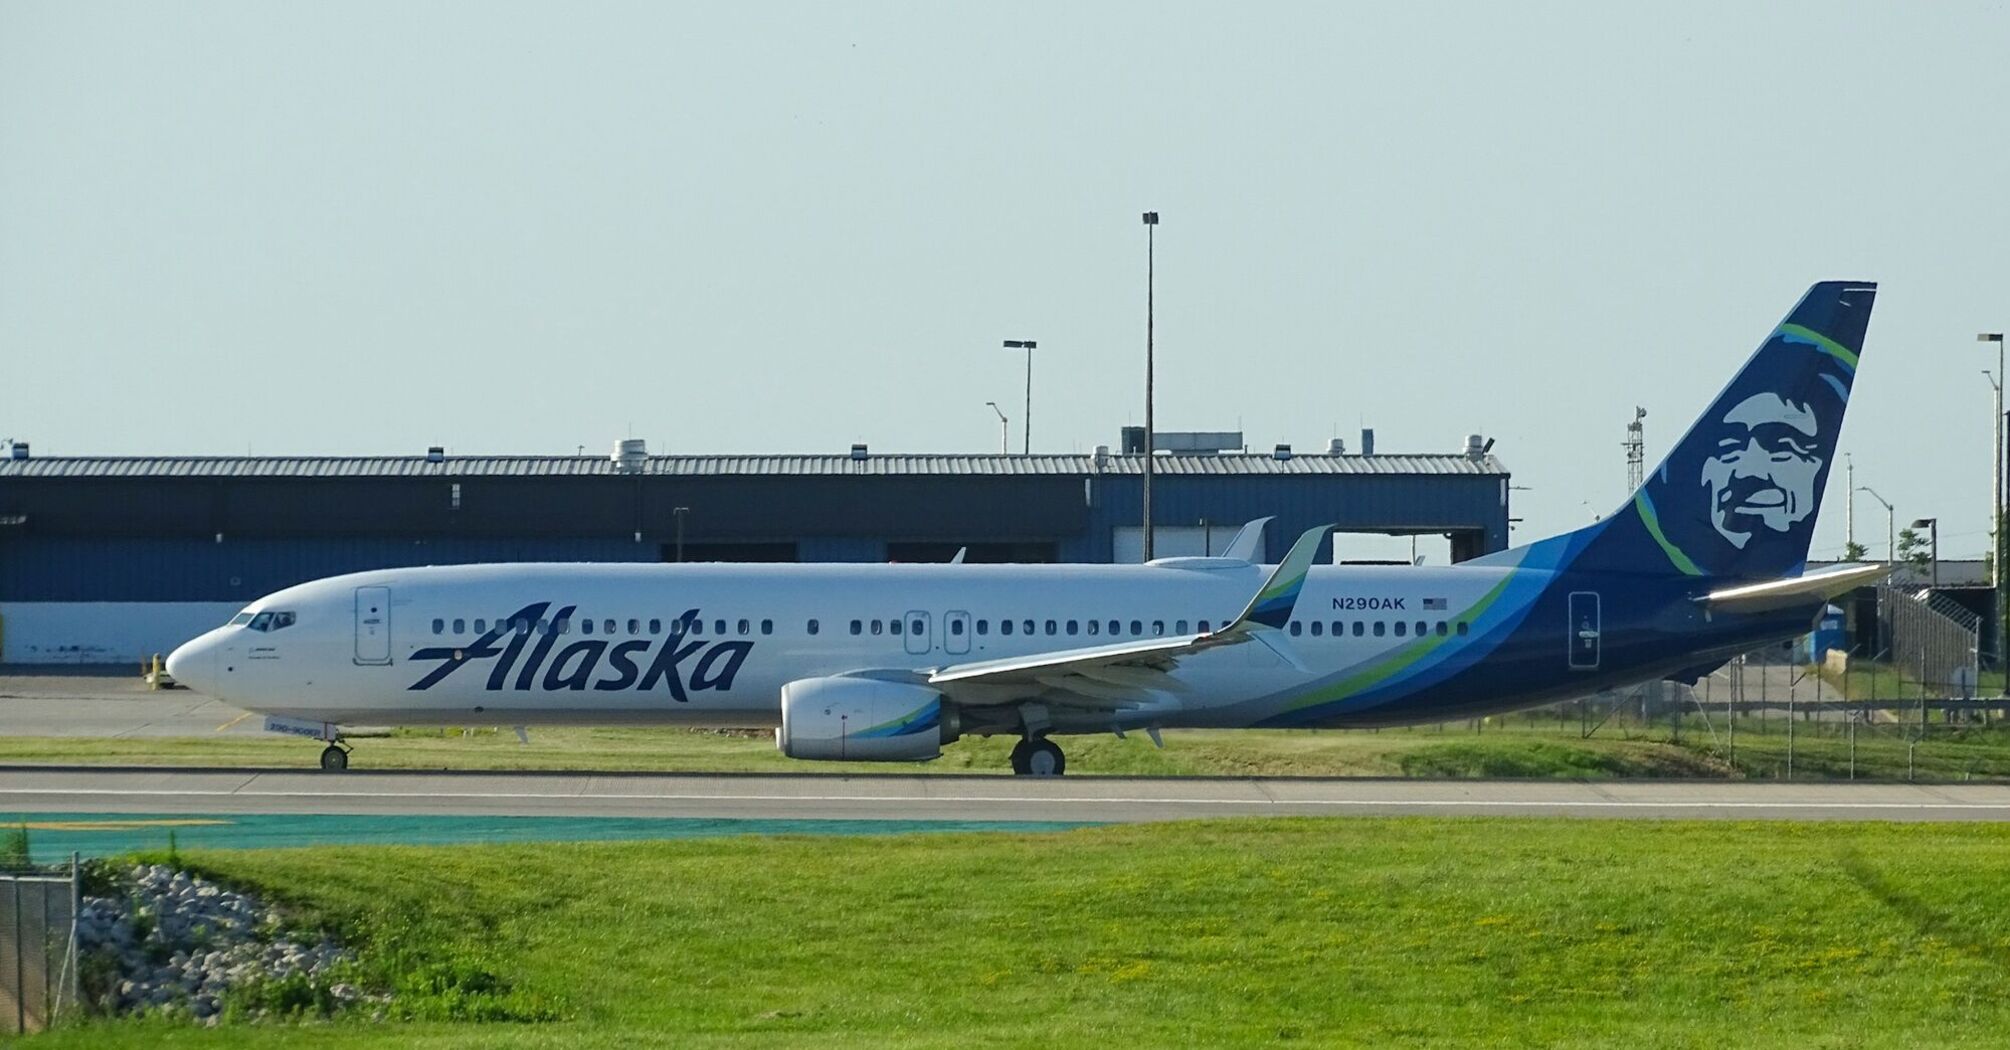 Alaska Airlines plane on the runway